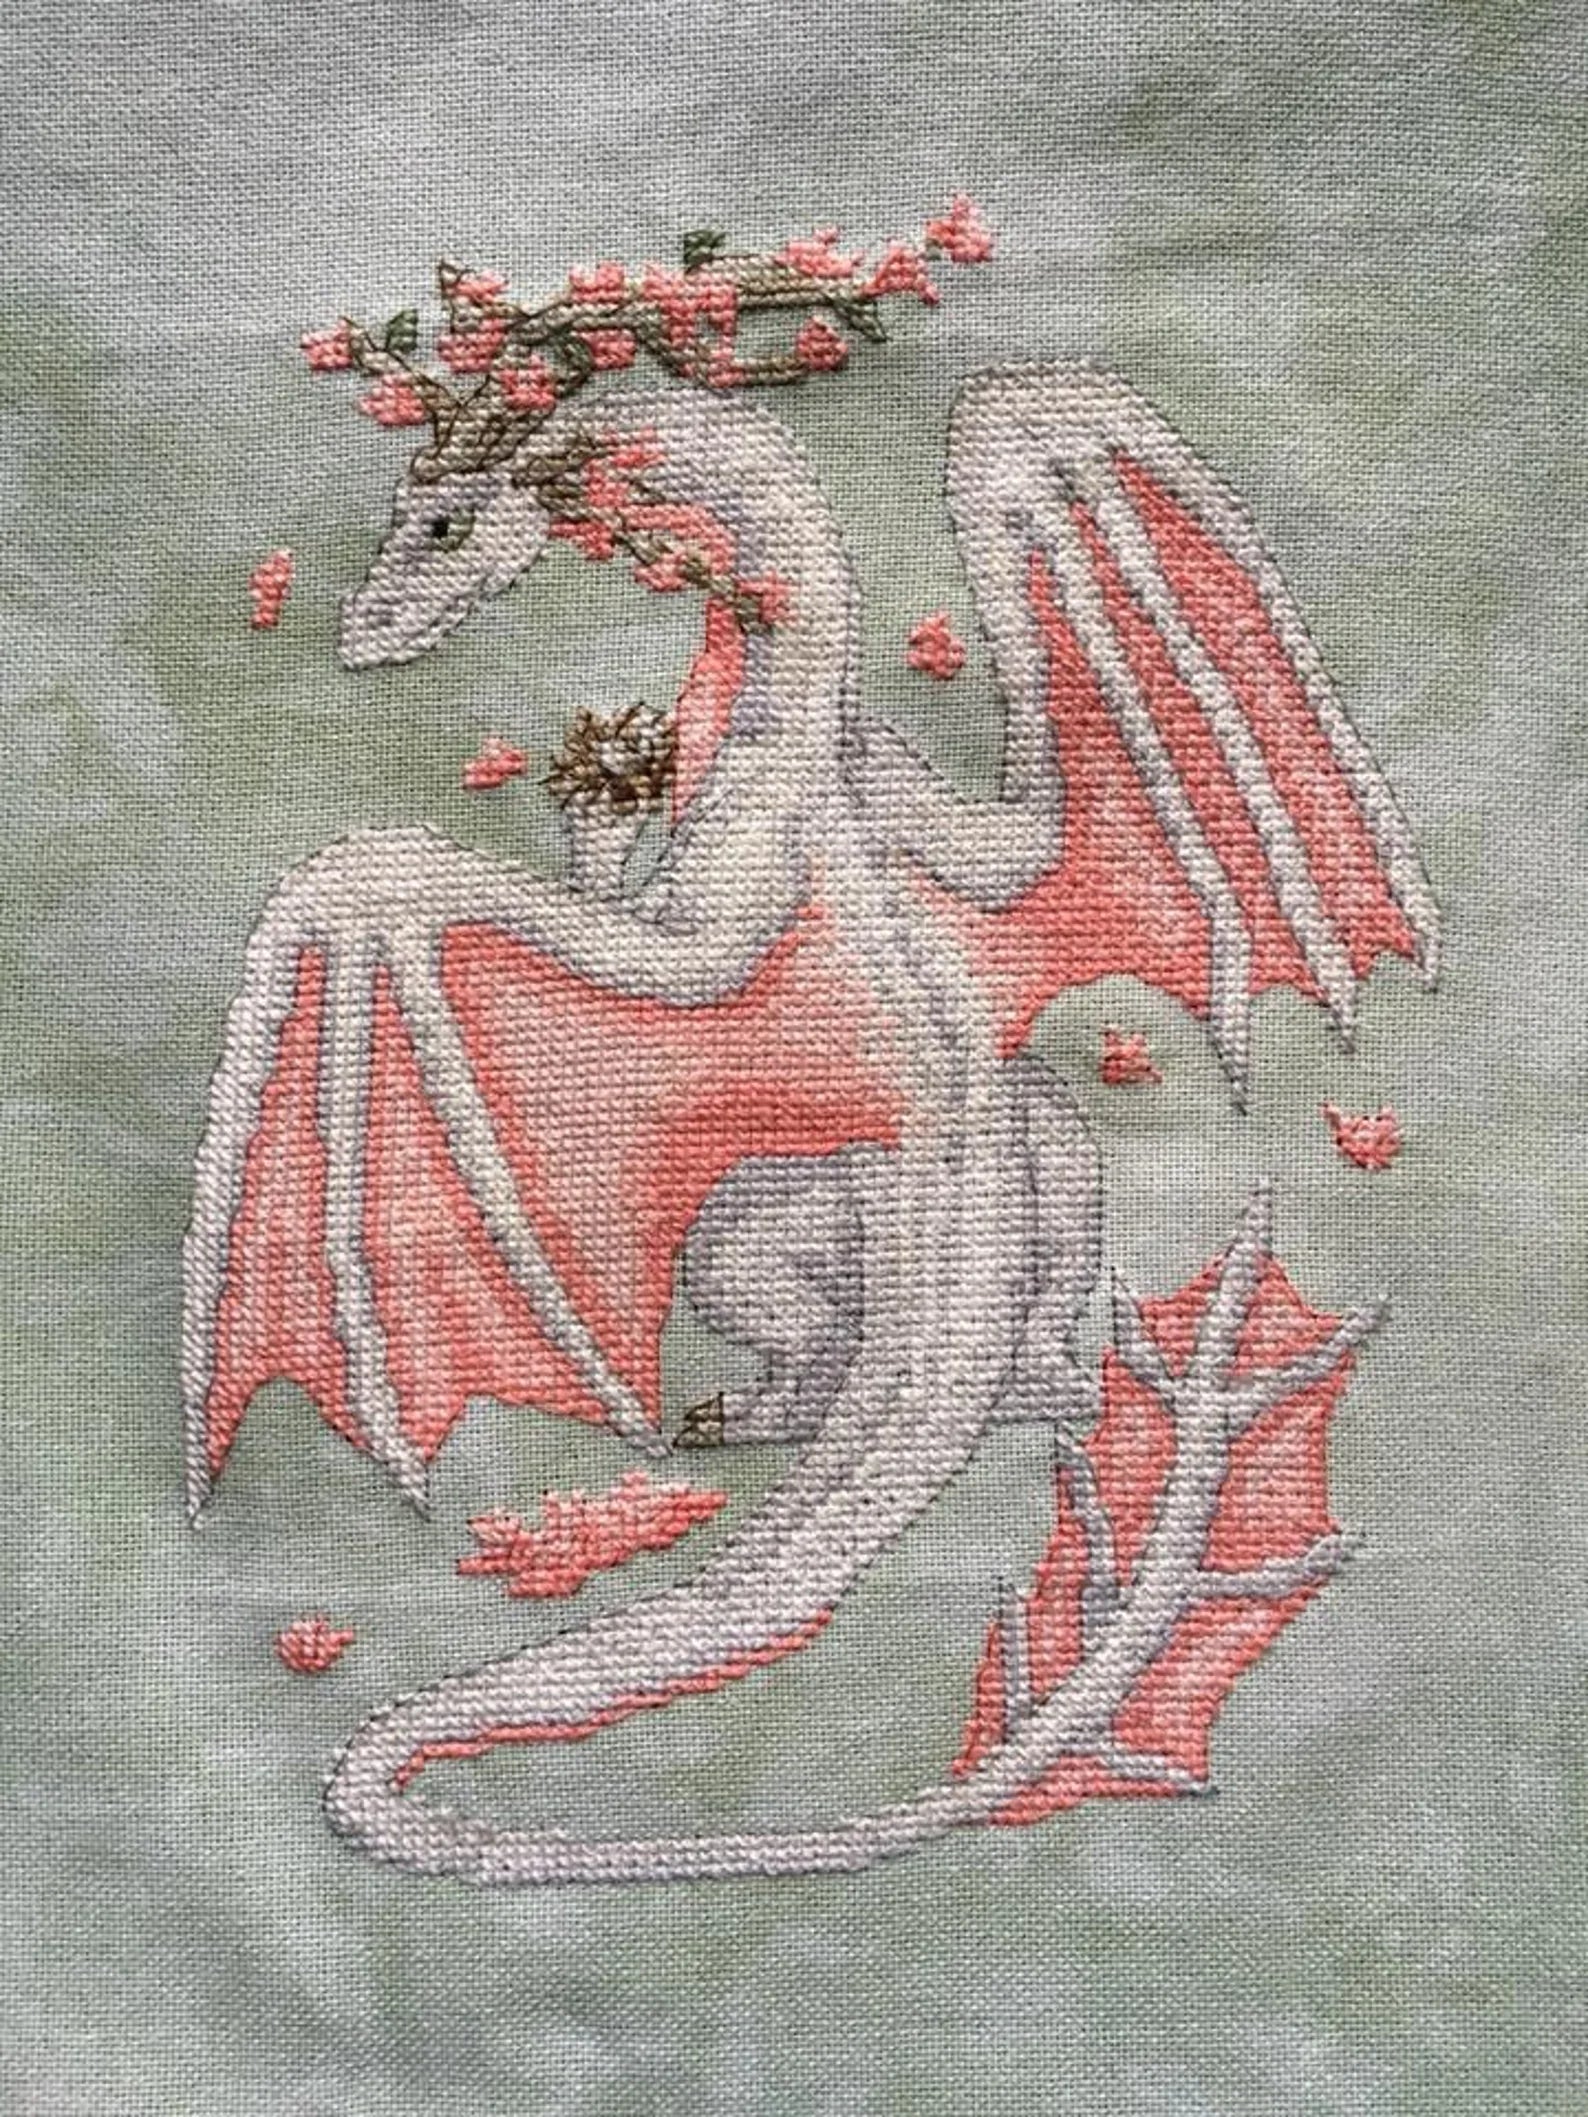 Spring Dragon by Ingleside Imaginarium